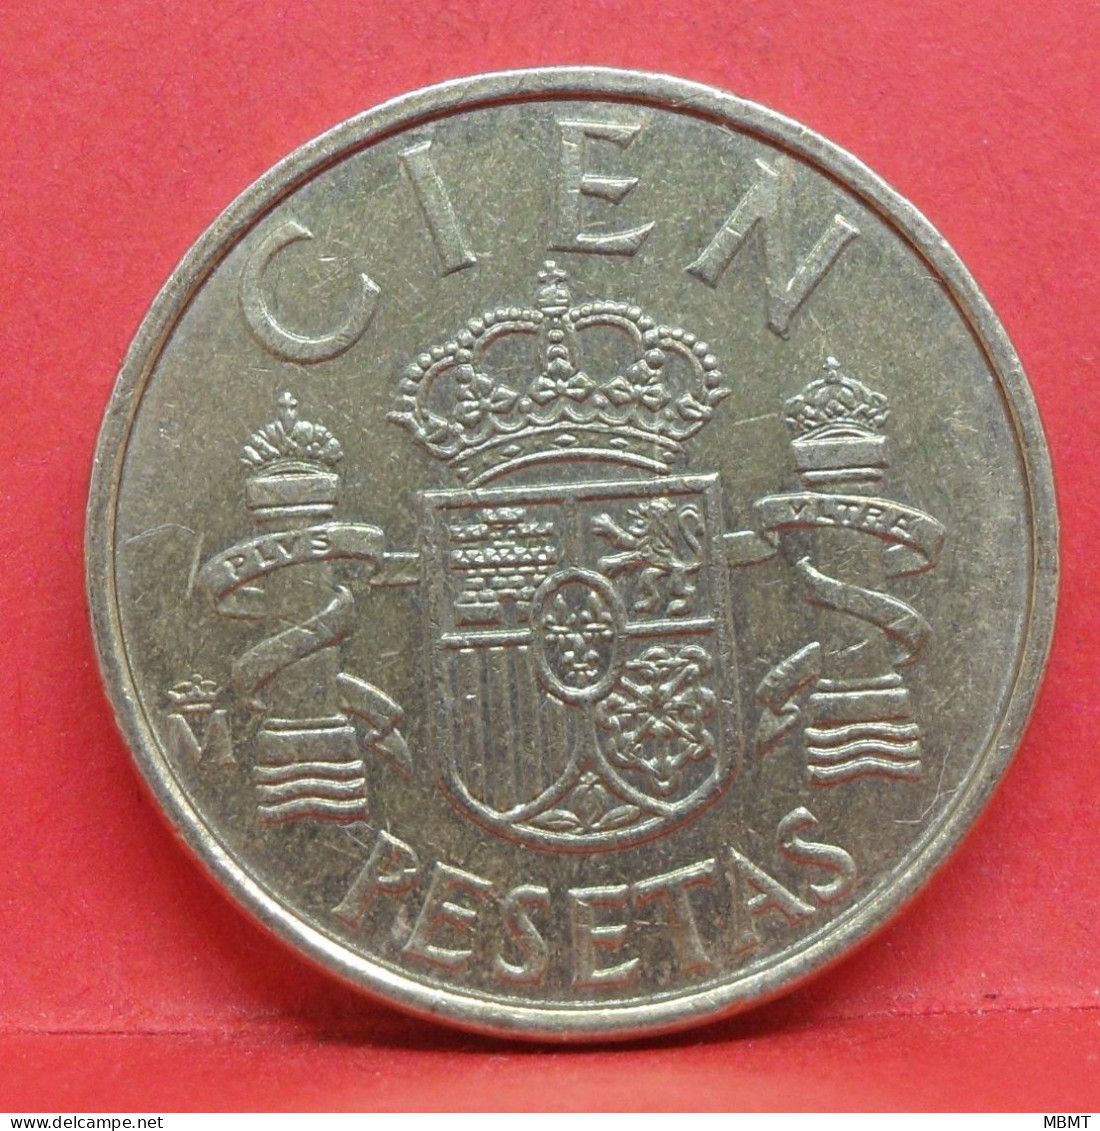 100 Pesetas 1983 - TTB - Pièce Monnaie Espagne - Article N°2494 - 100 Pesetas